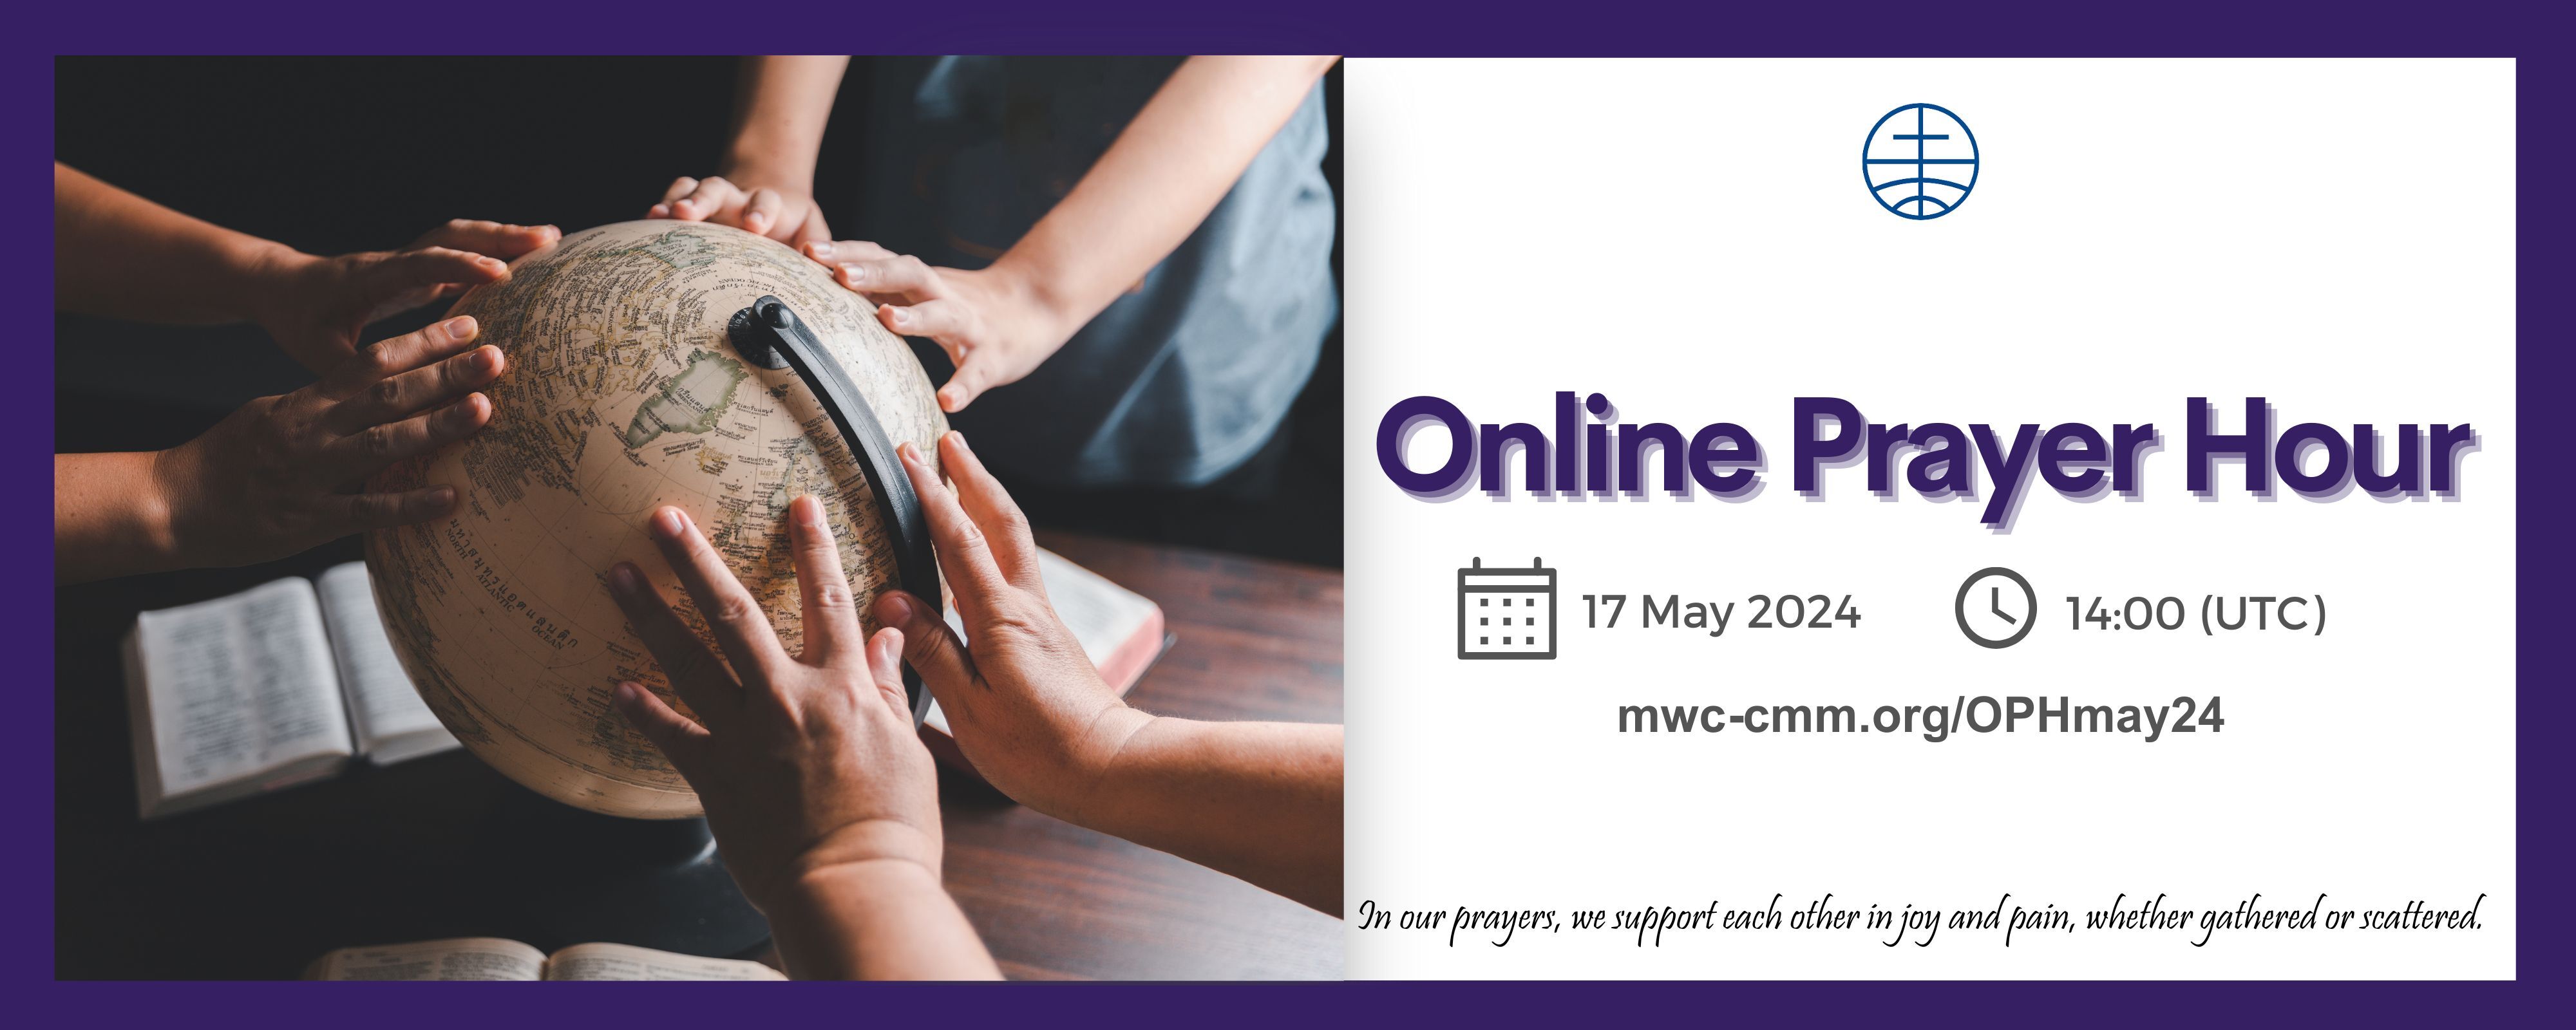 Online Prayer Hour 17 May 2024